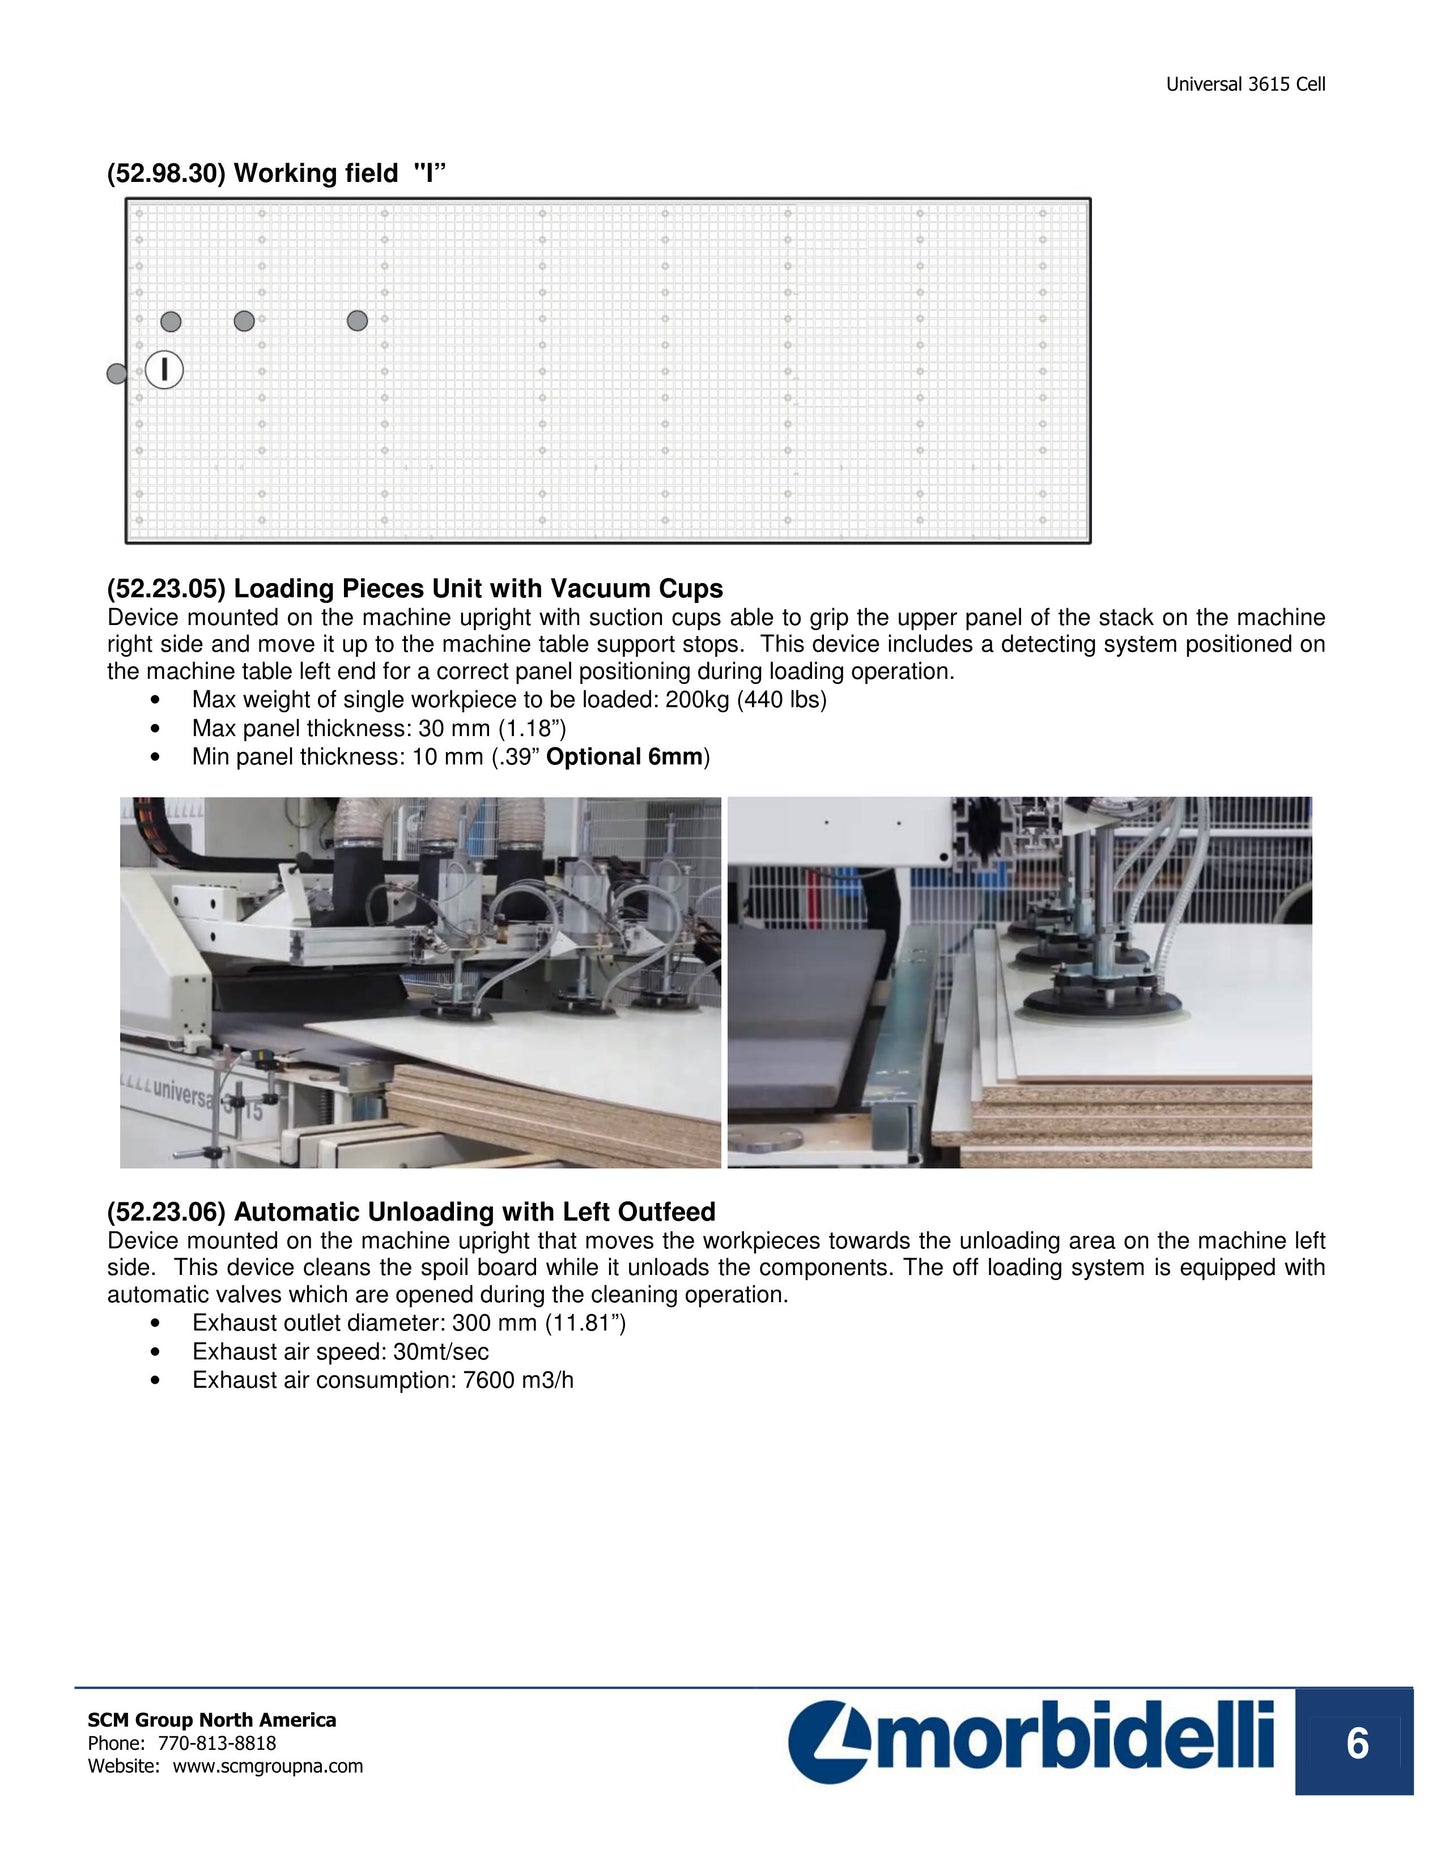 2014 Morbidelli Universal 3615 Cell CNC Router - Illinois